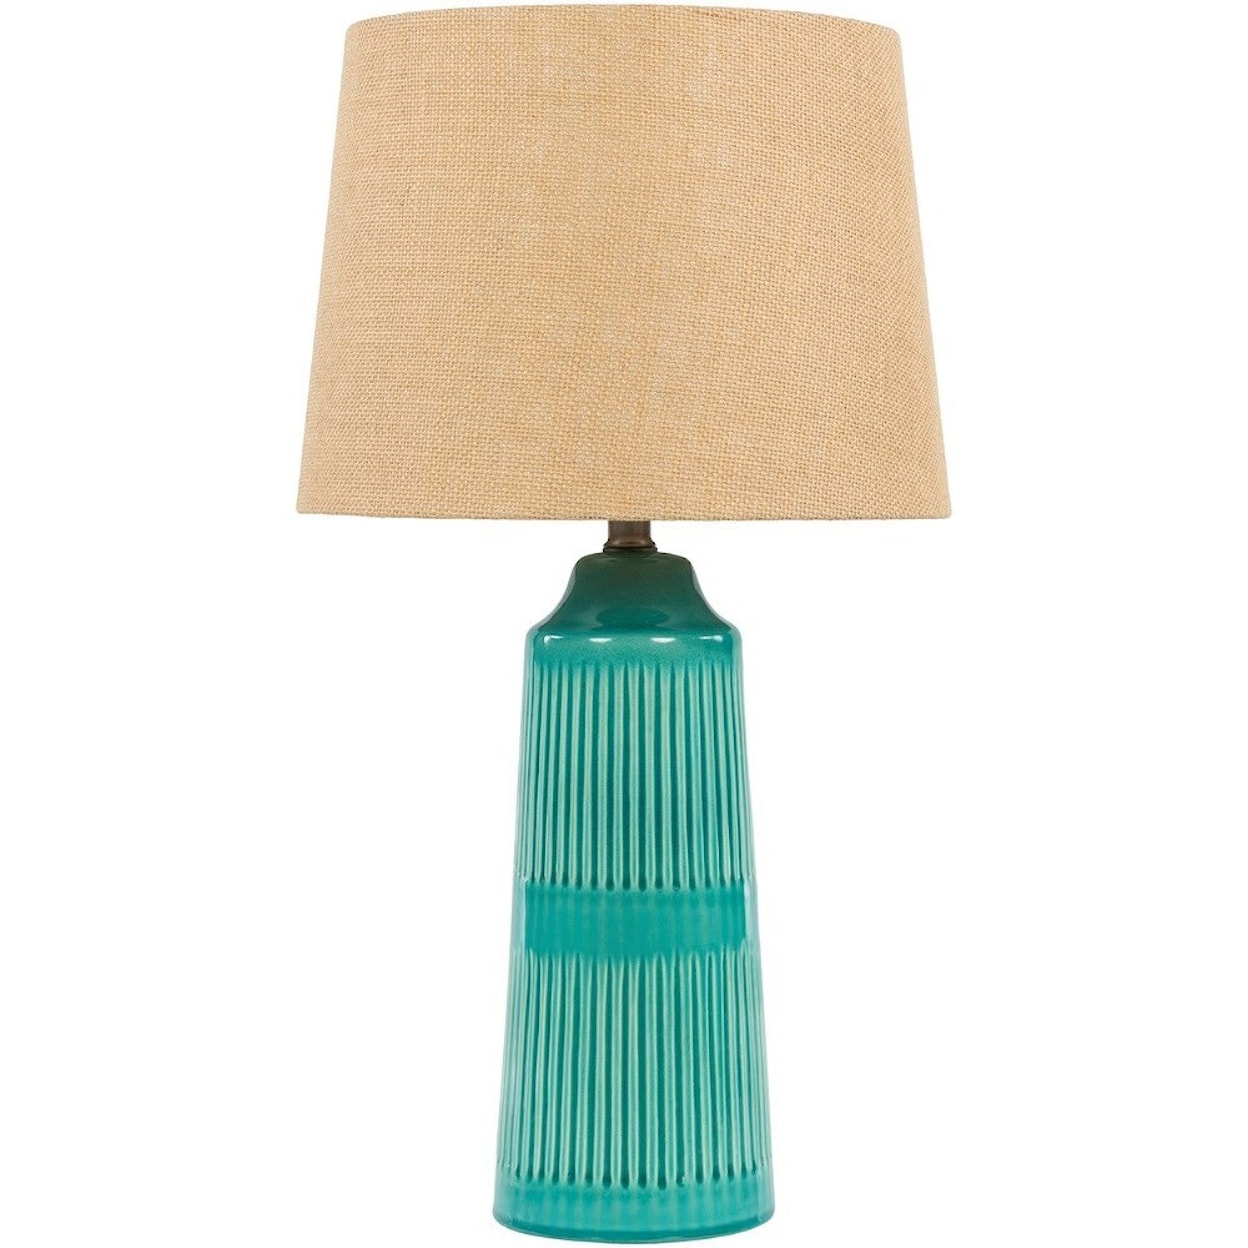 Surya Tellico Blue Coastal Table Lamp